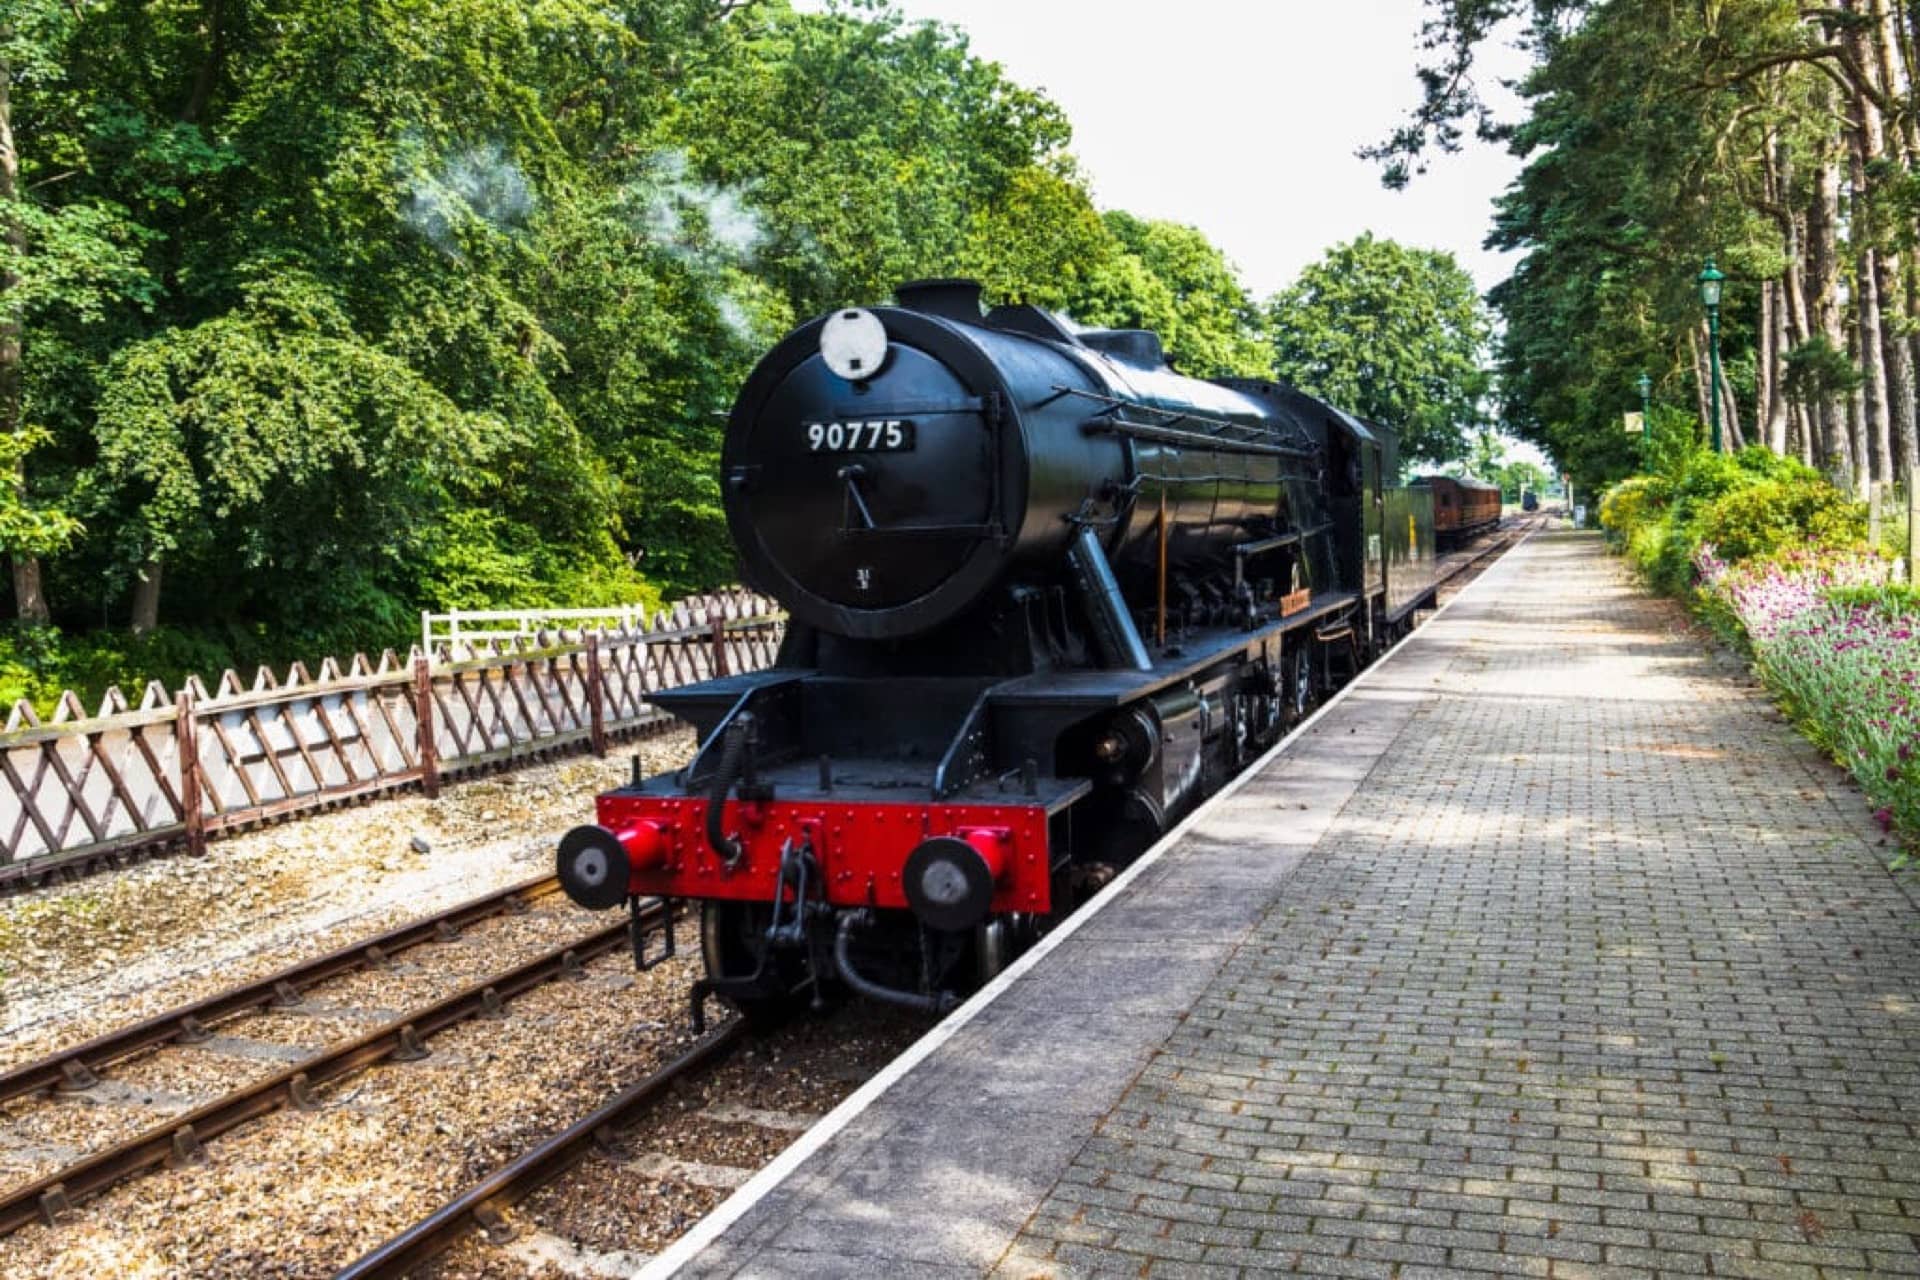 Poppy Line steam train, "The Royal Norfolk Regiment" steam train seen at Holt station in Norfolk, taken 9th July 2021.